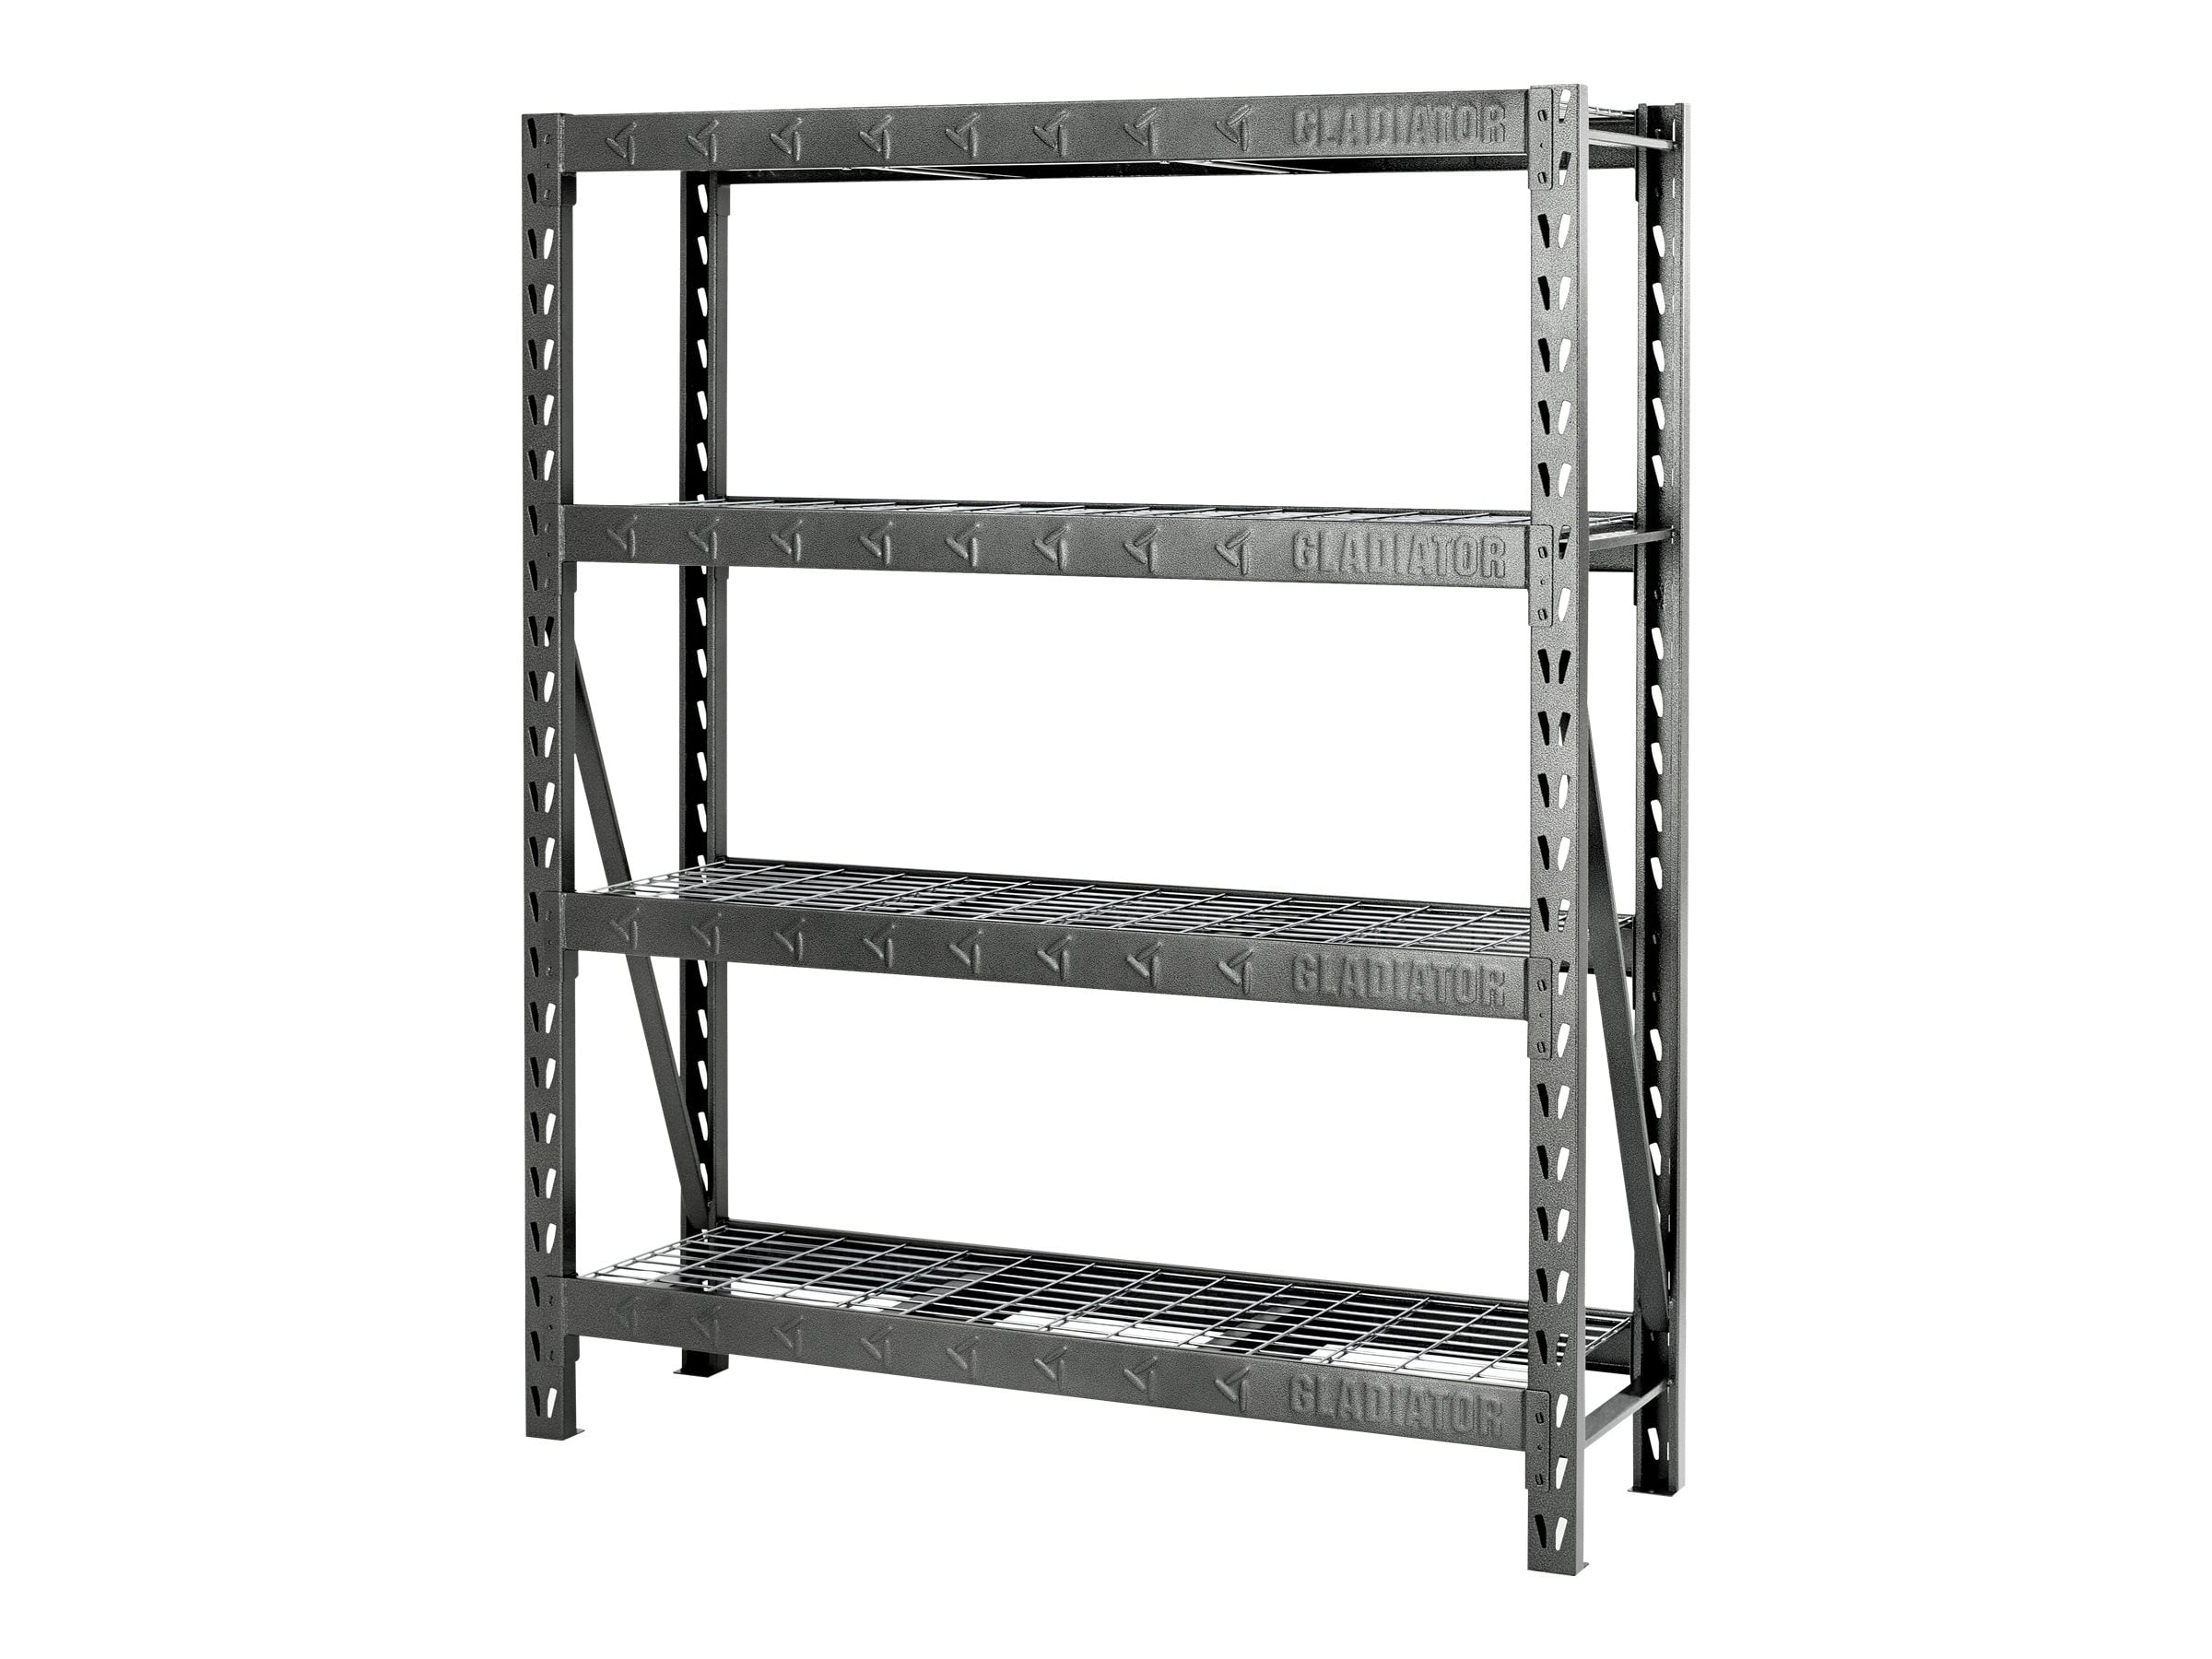 Gladiator Shelf Rack 4 Shelves, Gladiator Garage Storage Shelving Unit